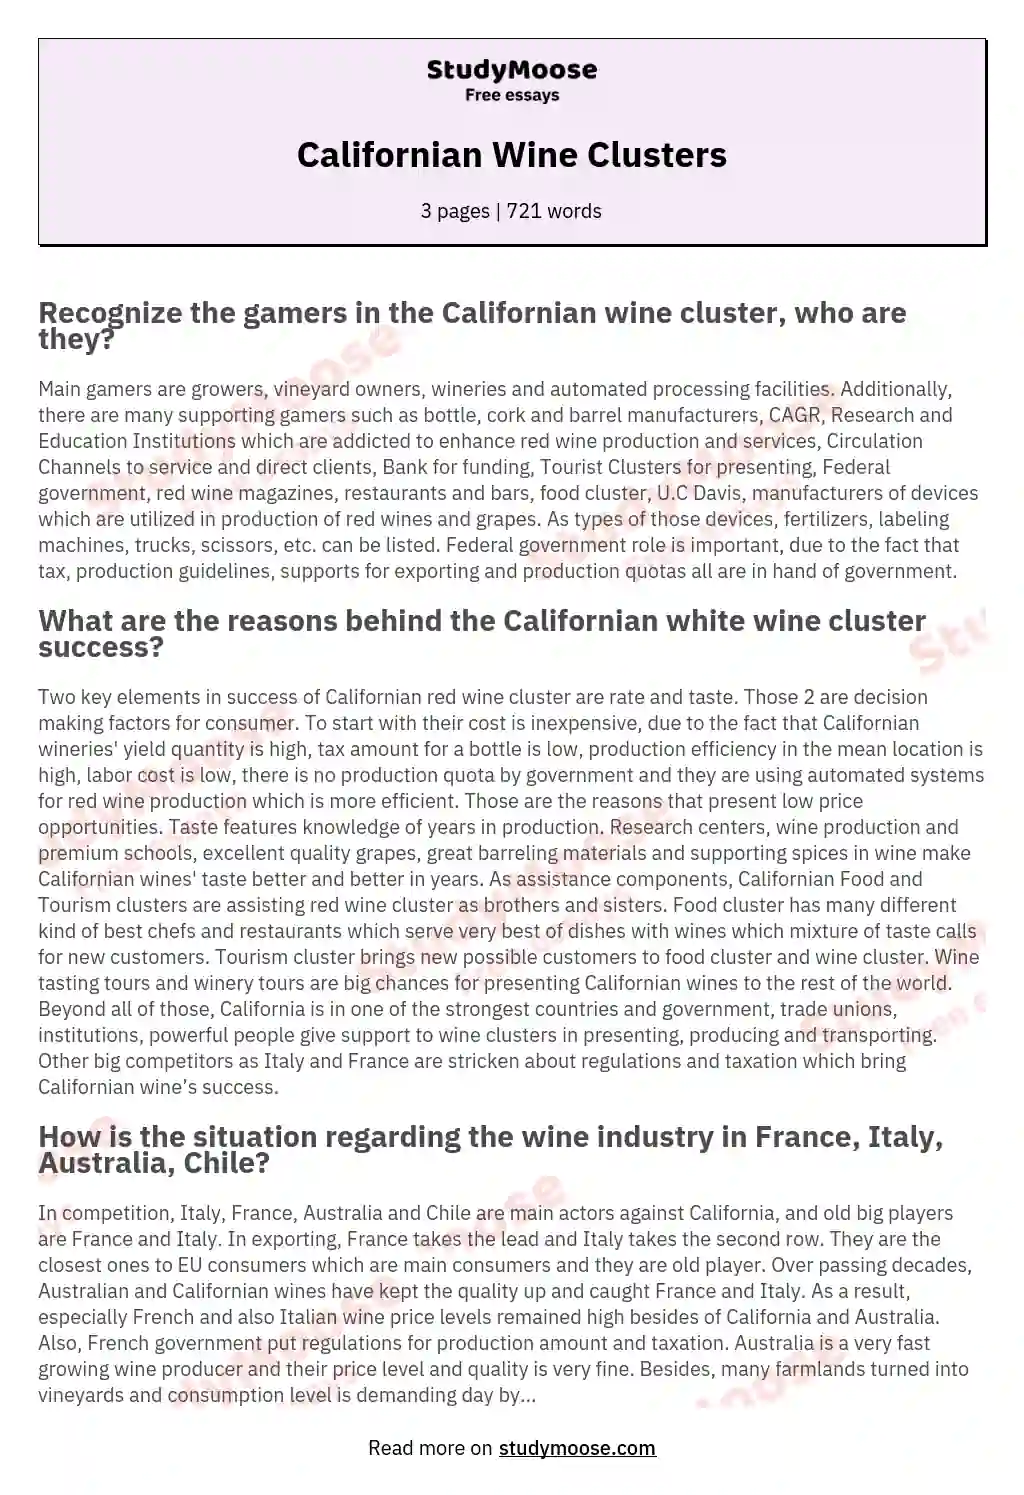 Californian Wine Clusters essay